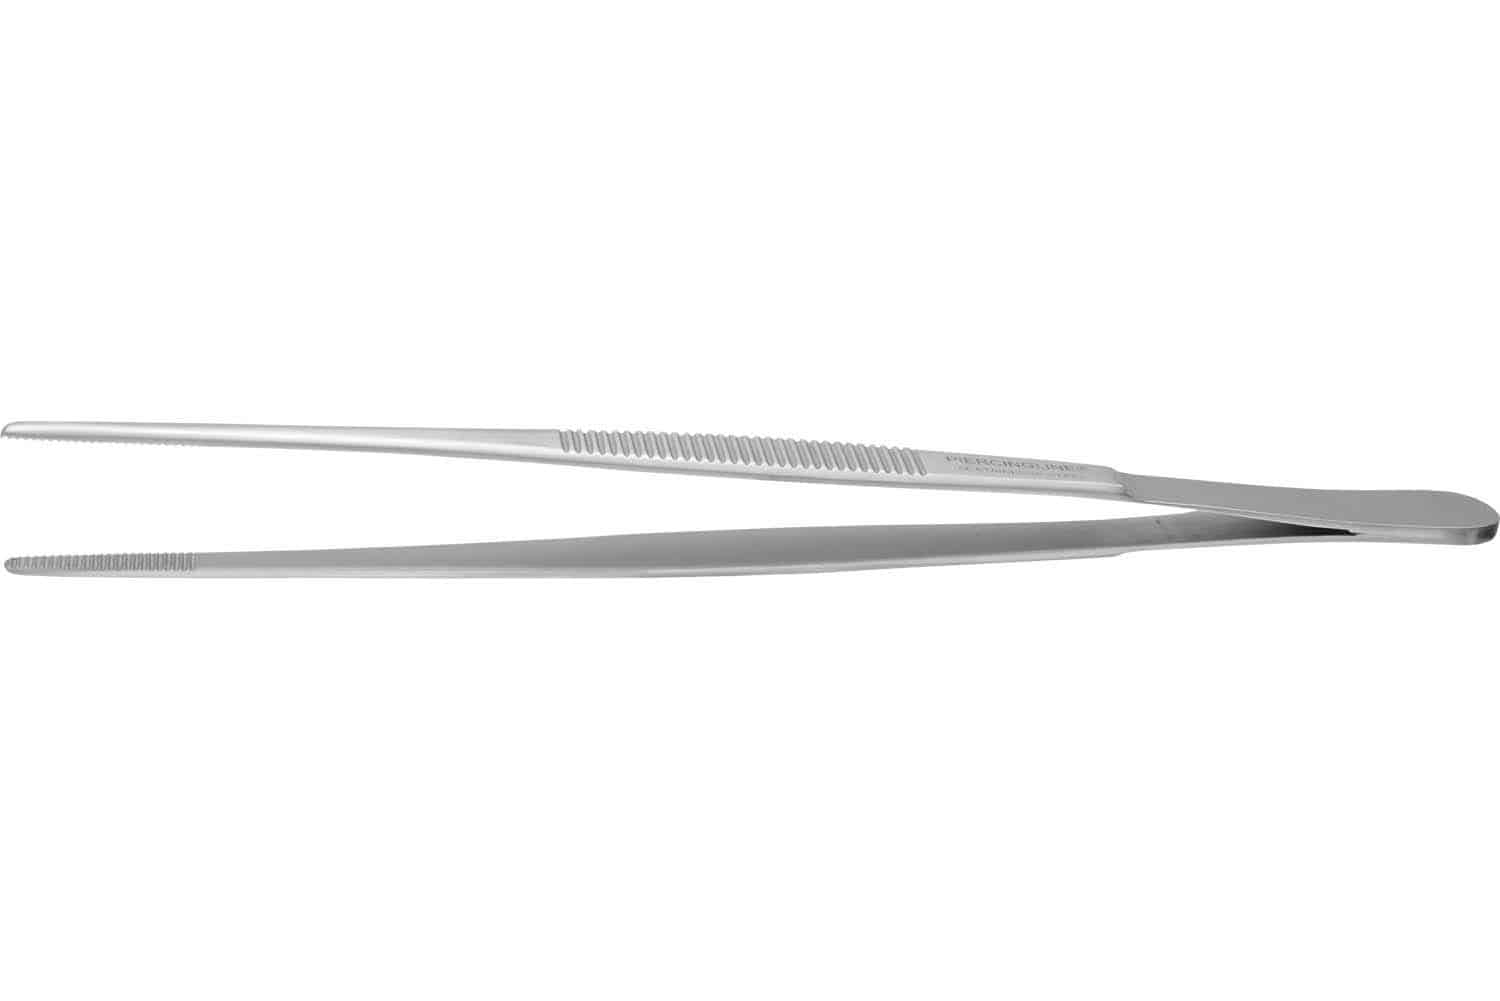 Stainless steel tweezers with crocodile serration